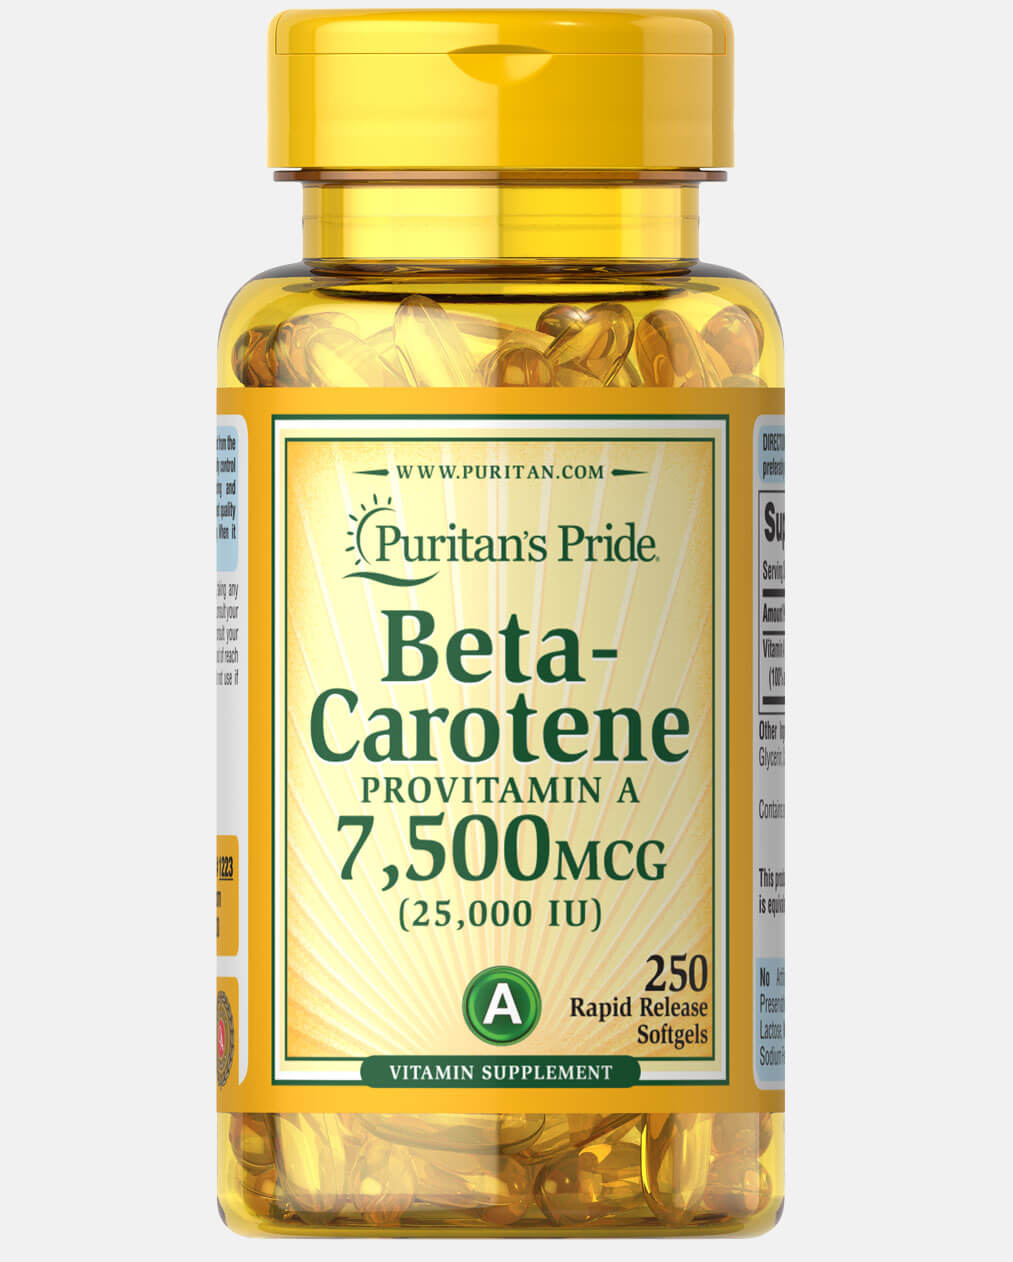 Beta-Carotene 25,000 IU